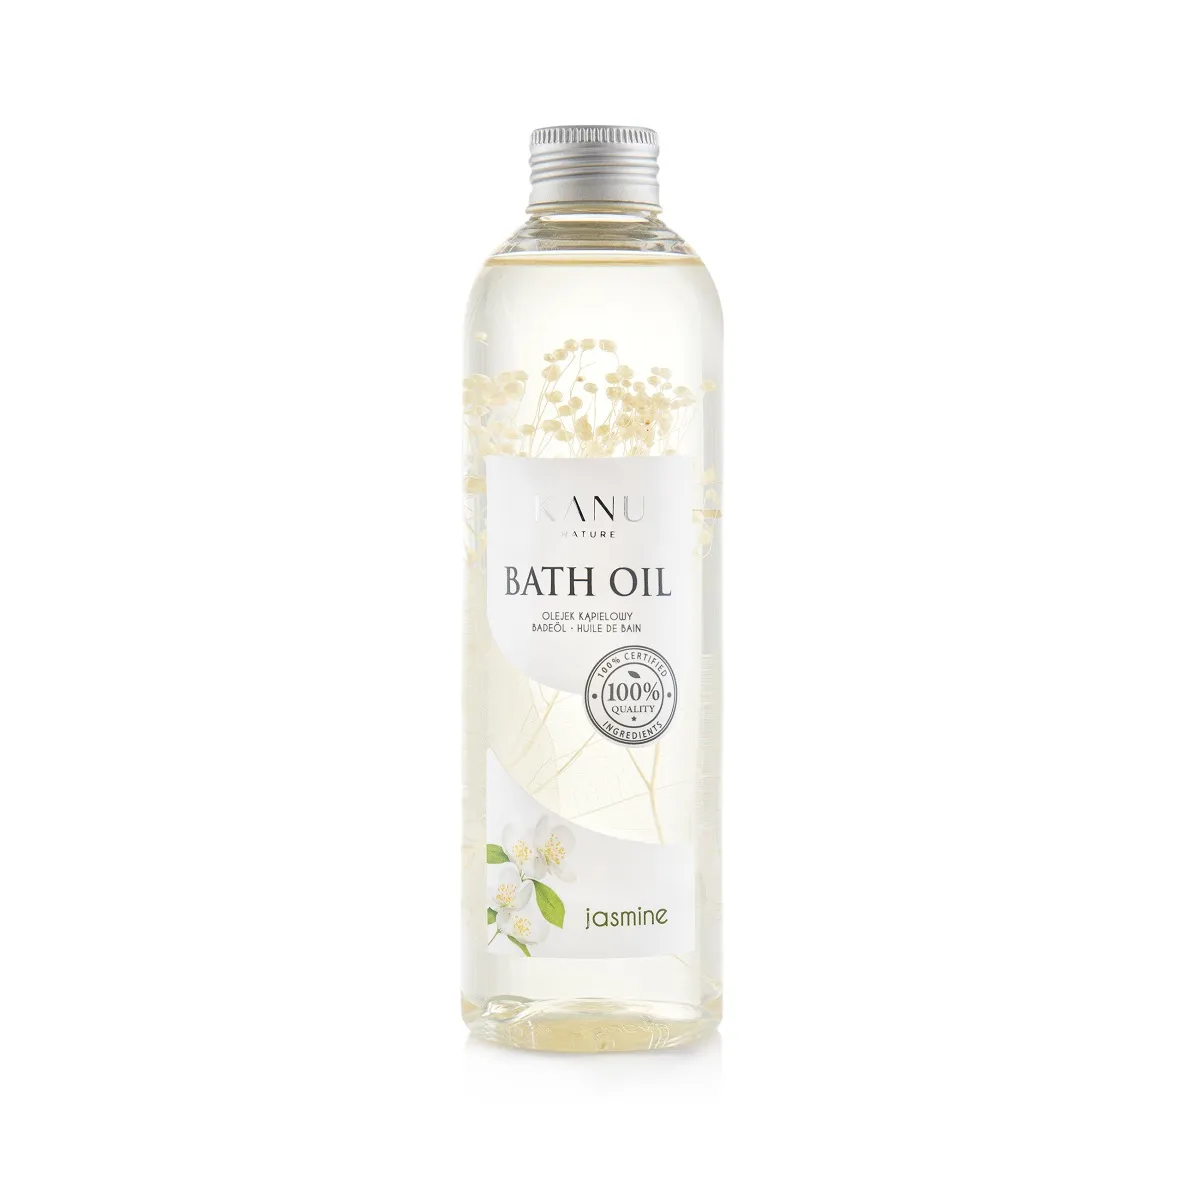 Kanu Nature Bath Oil Jasmine olejek kąpielowy, 250 ml